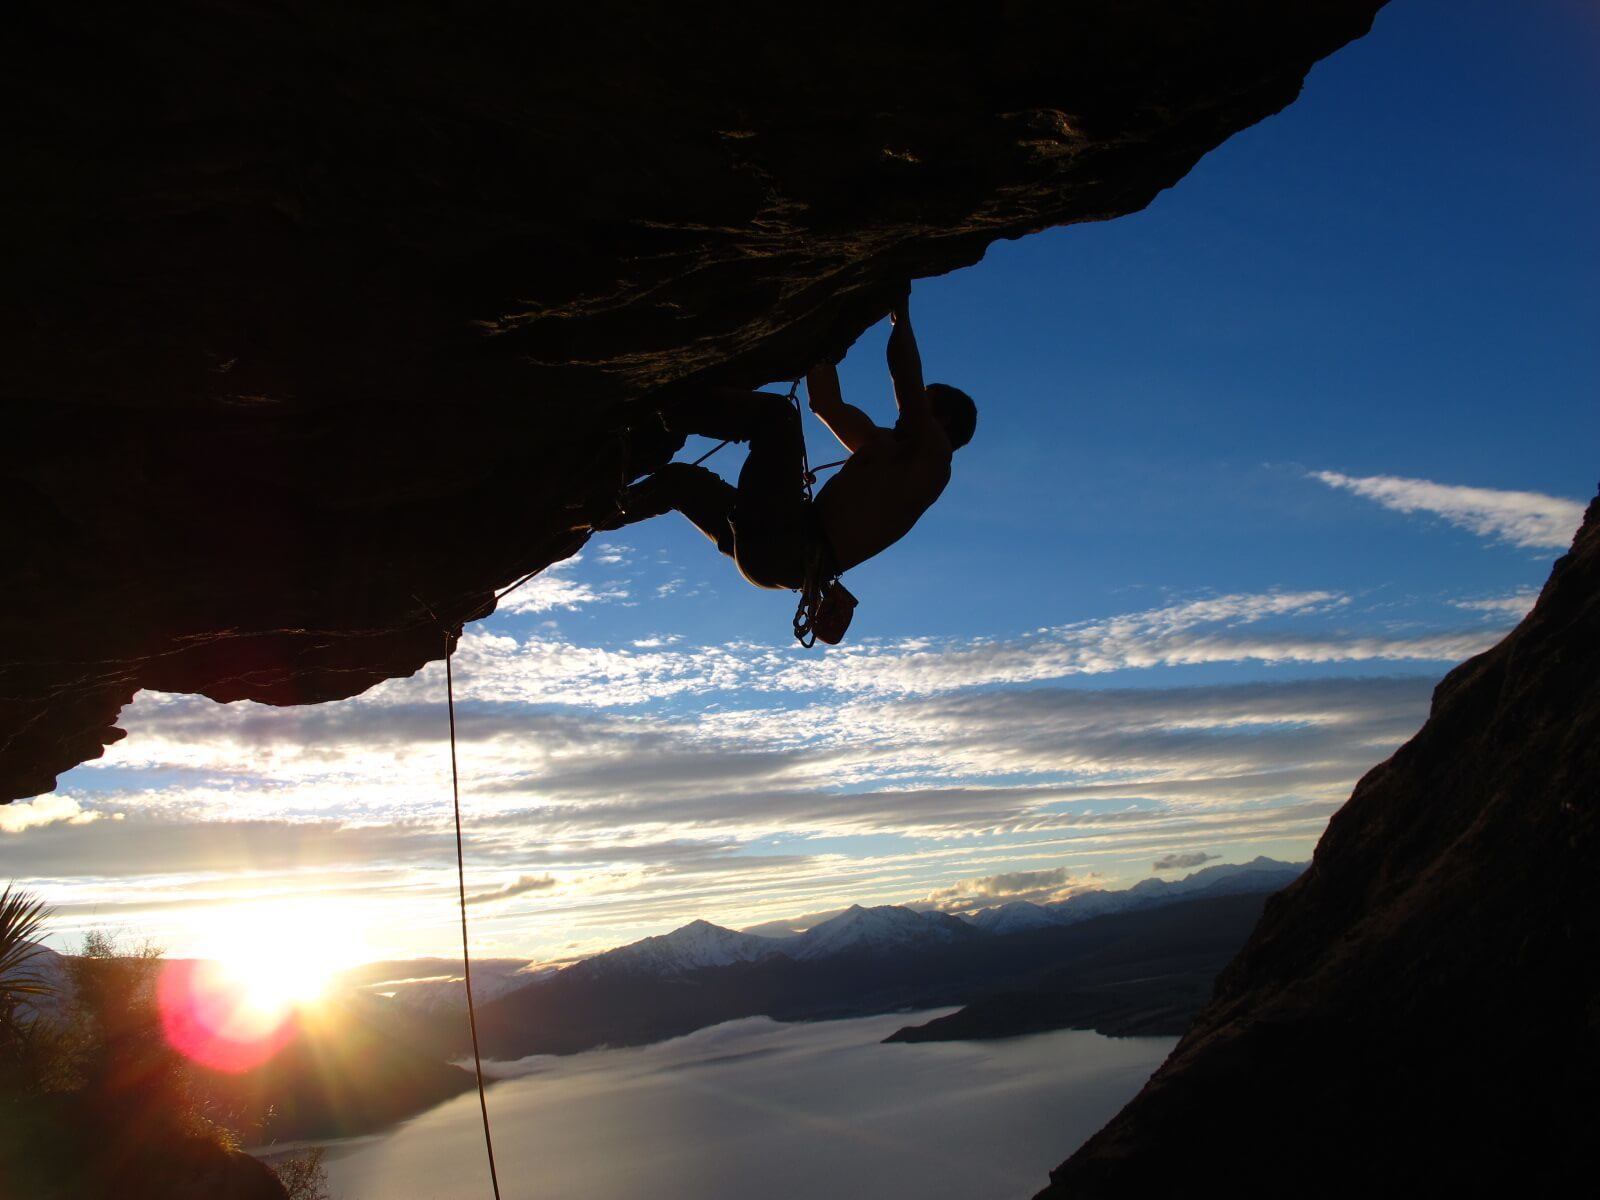 Rock climbing has taken off internationally as an adventure tourism activity